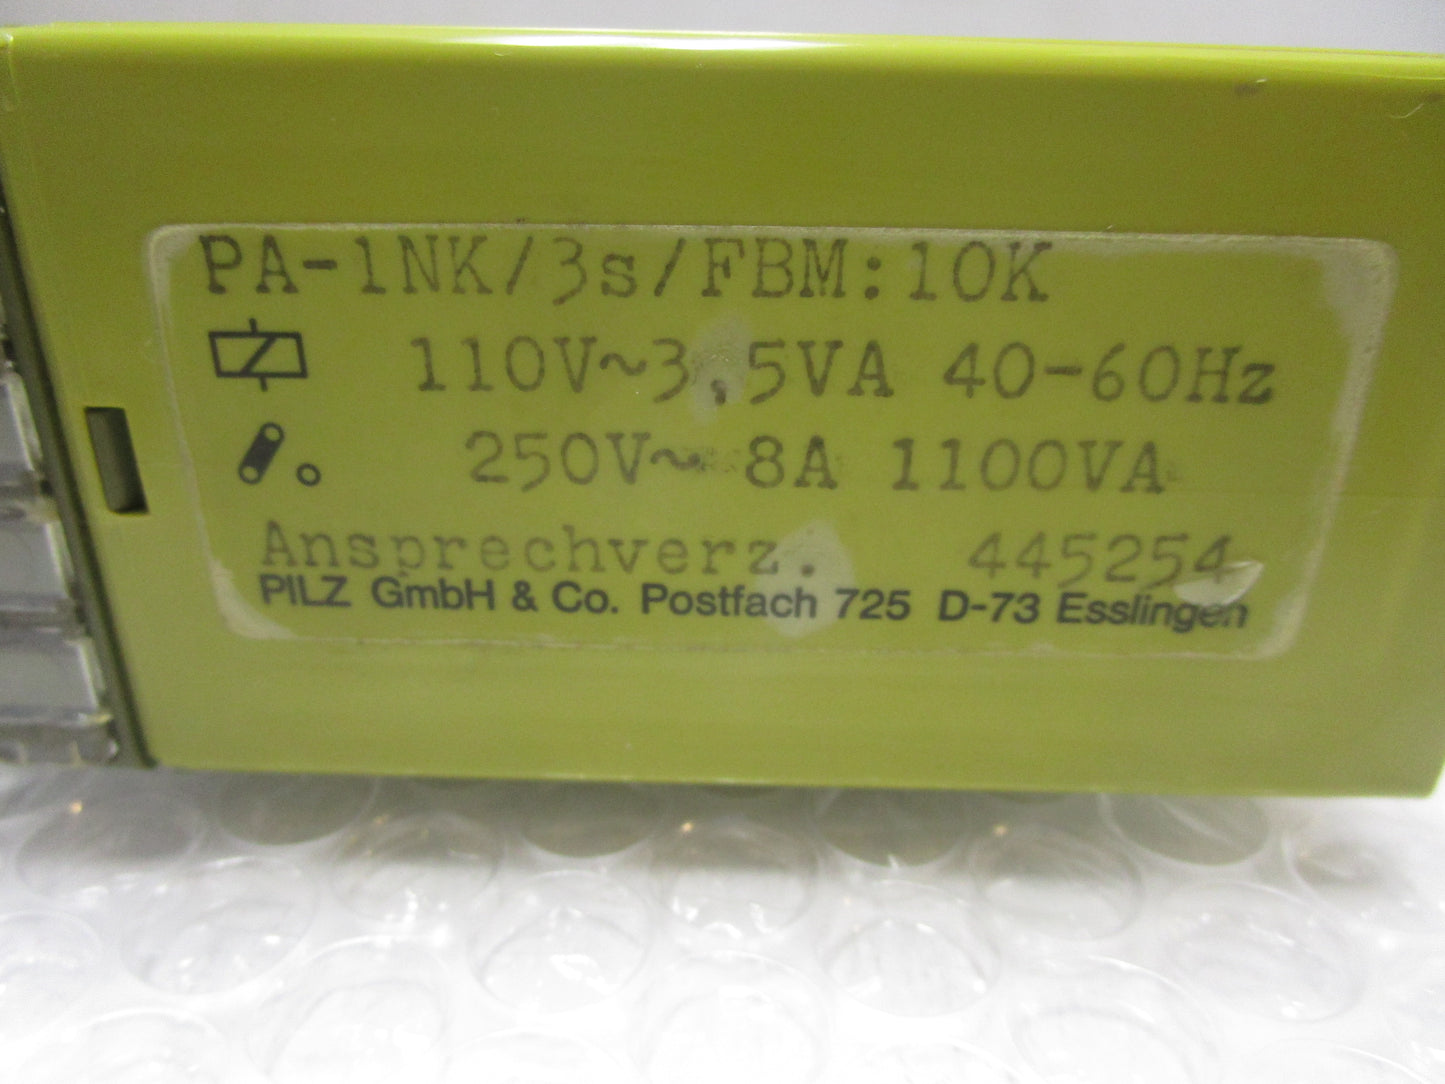 PLIZ PA-1NK/3s/FBM;10K (NEW-OPEN BOX)